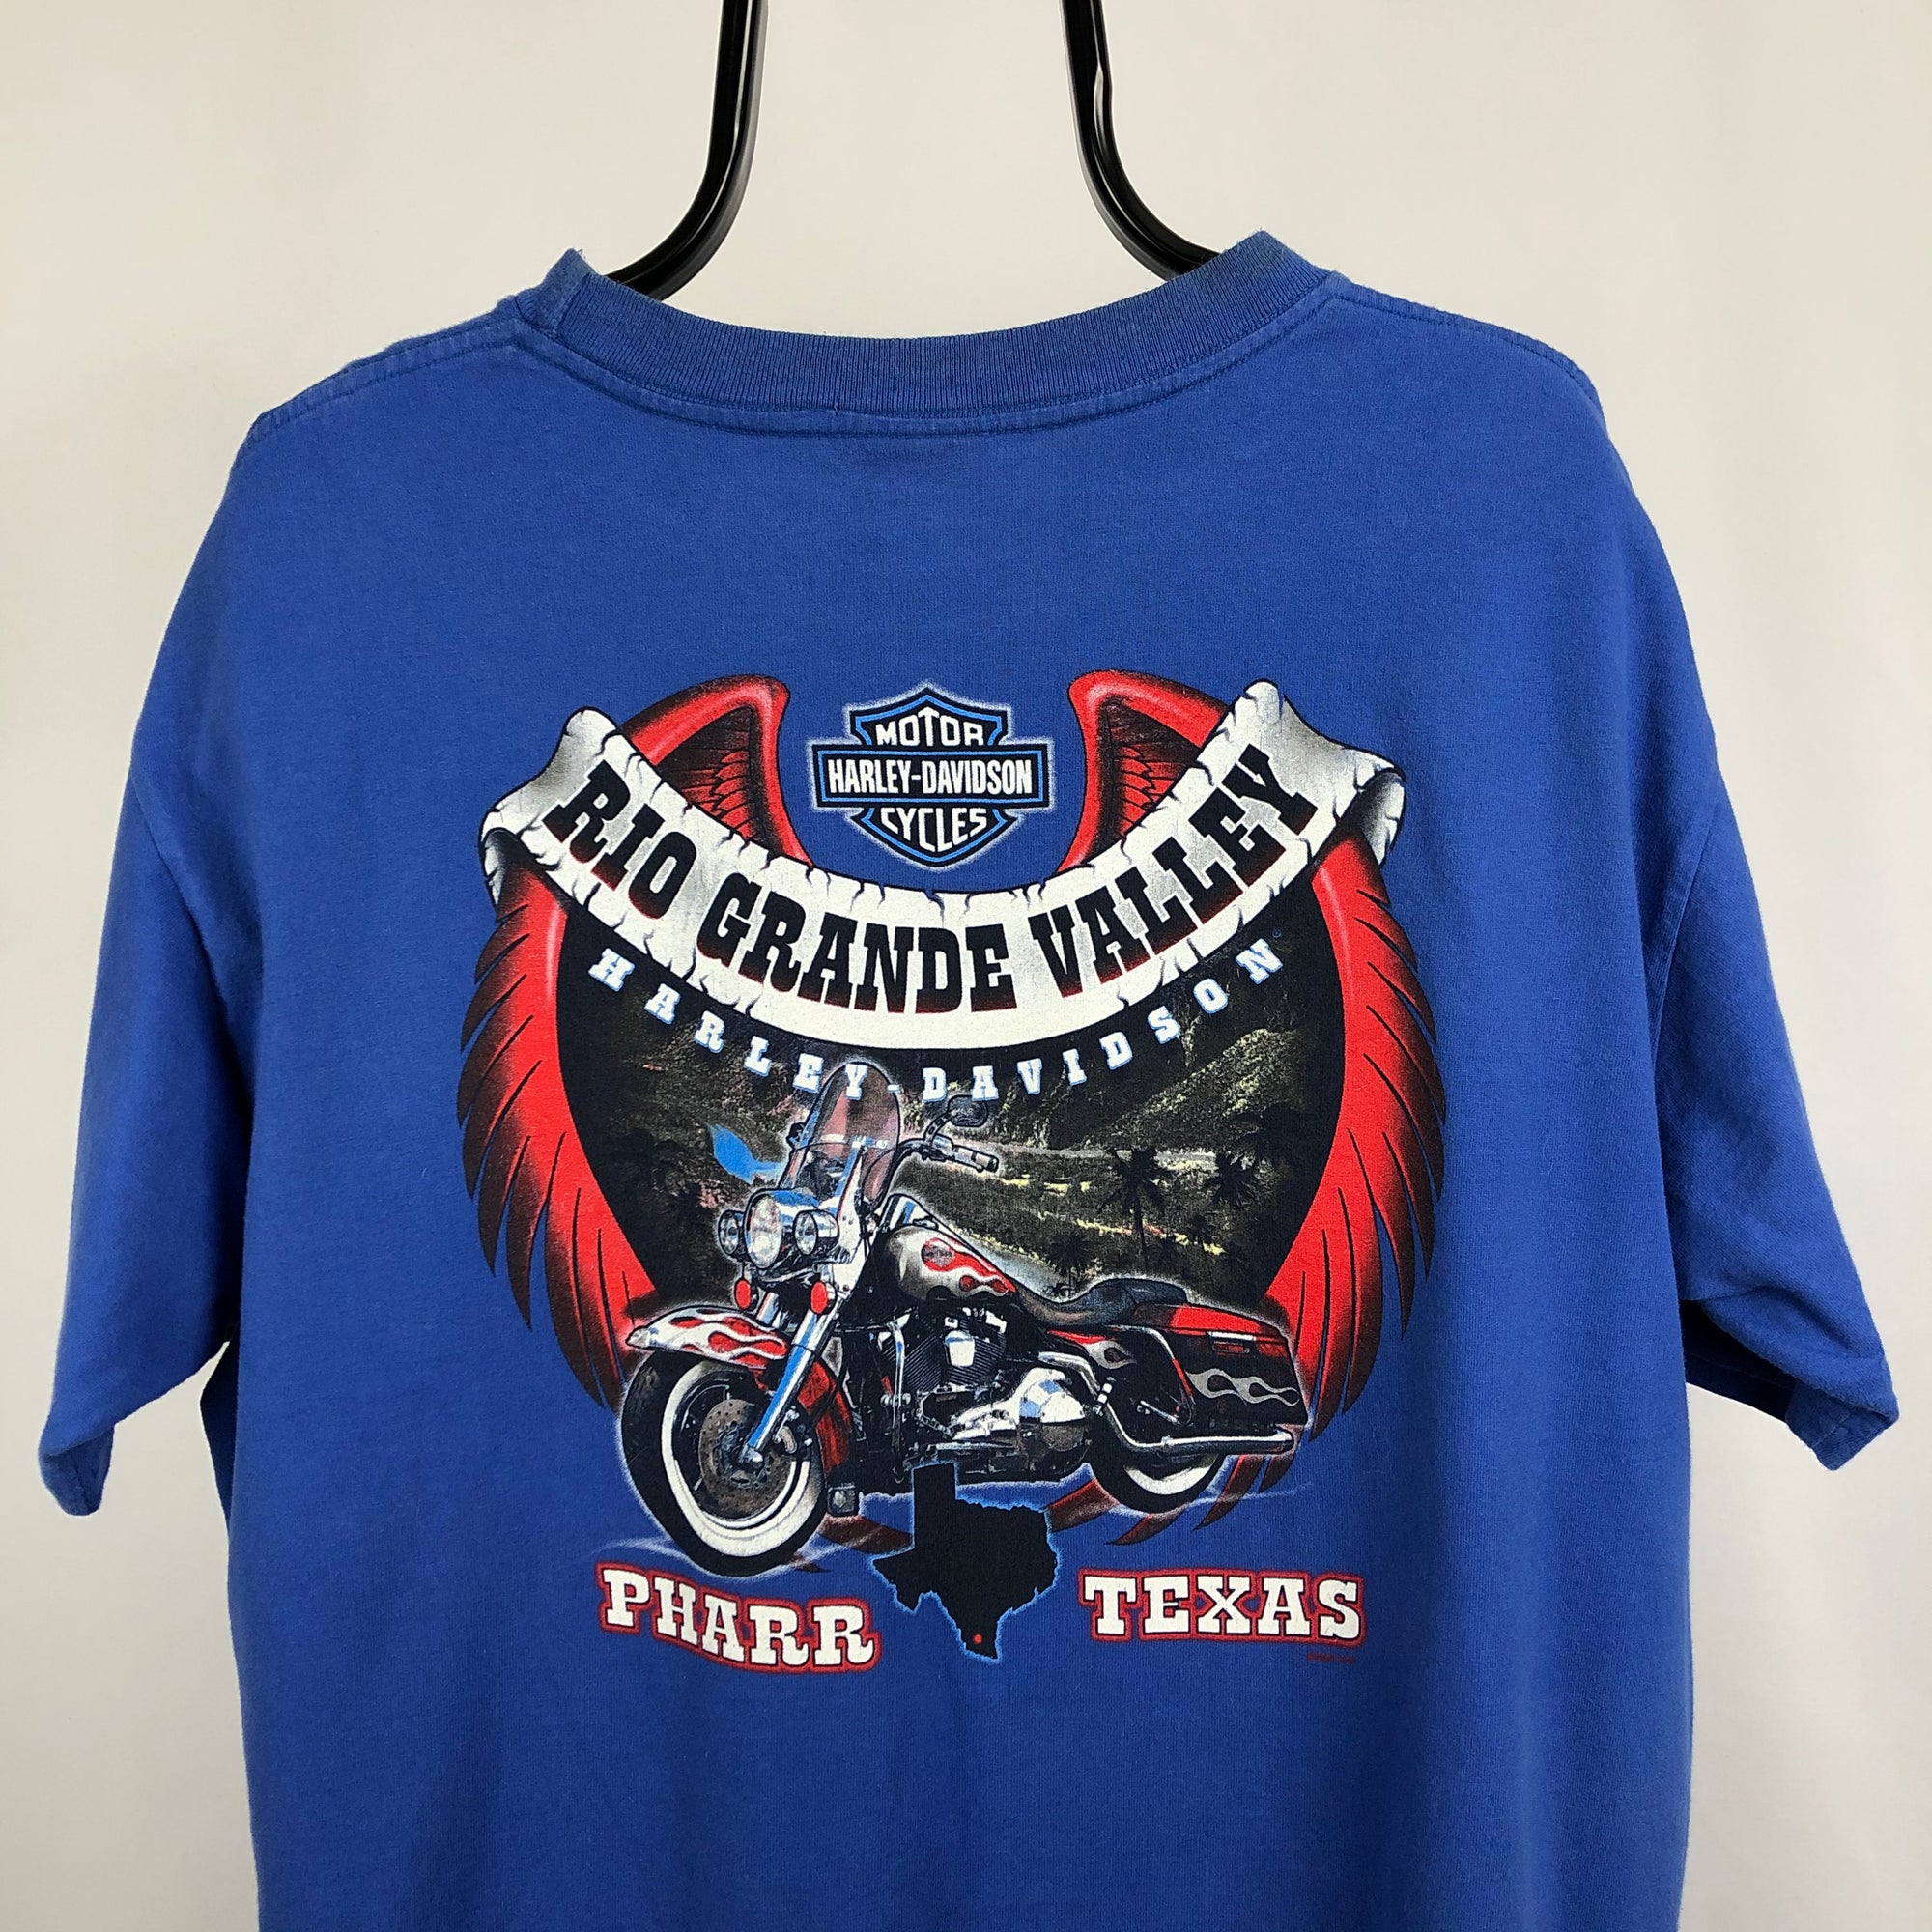 Vintage Harley Davidson Rio Grande Valley Tee - Men's Large/Women's XL